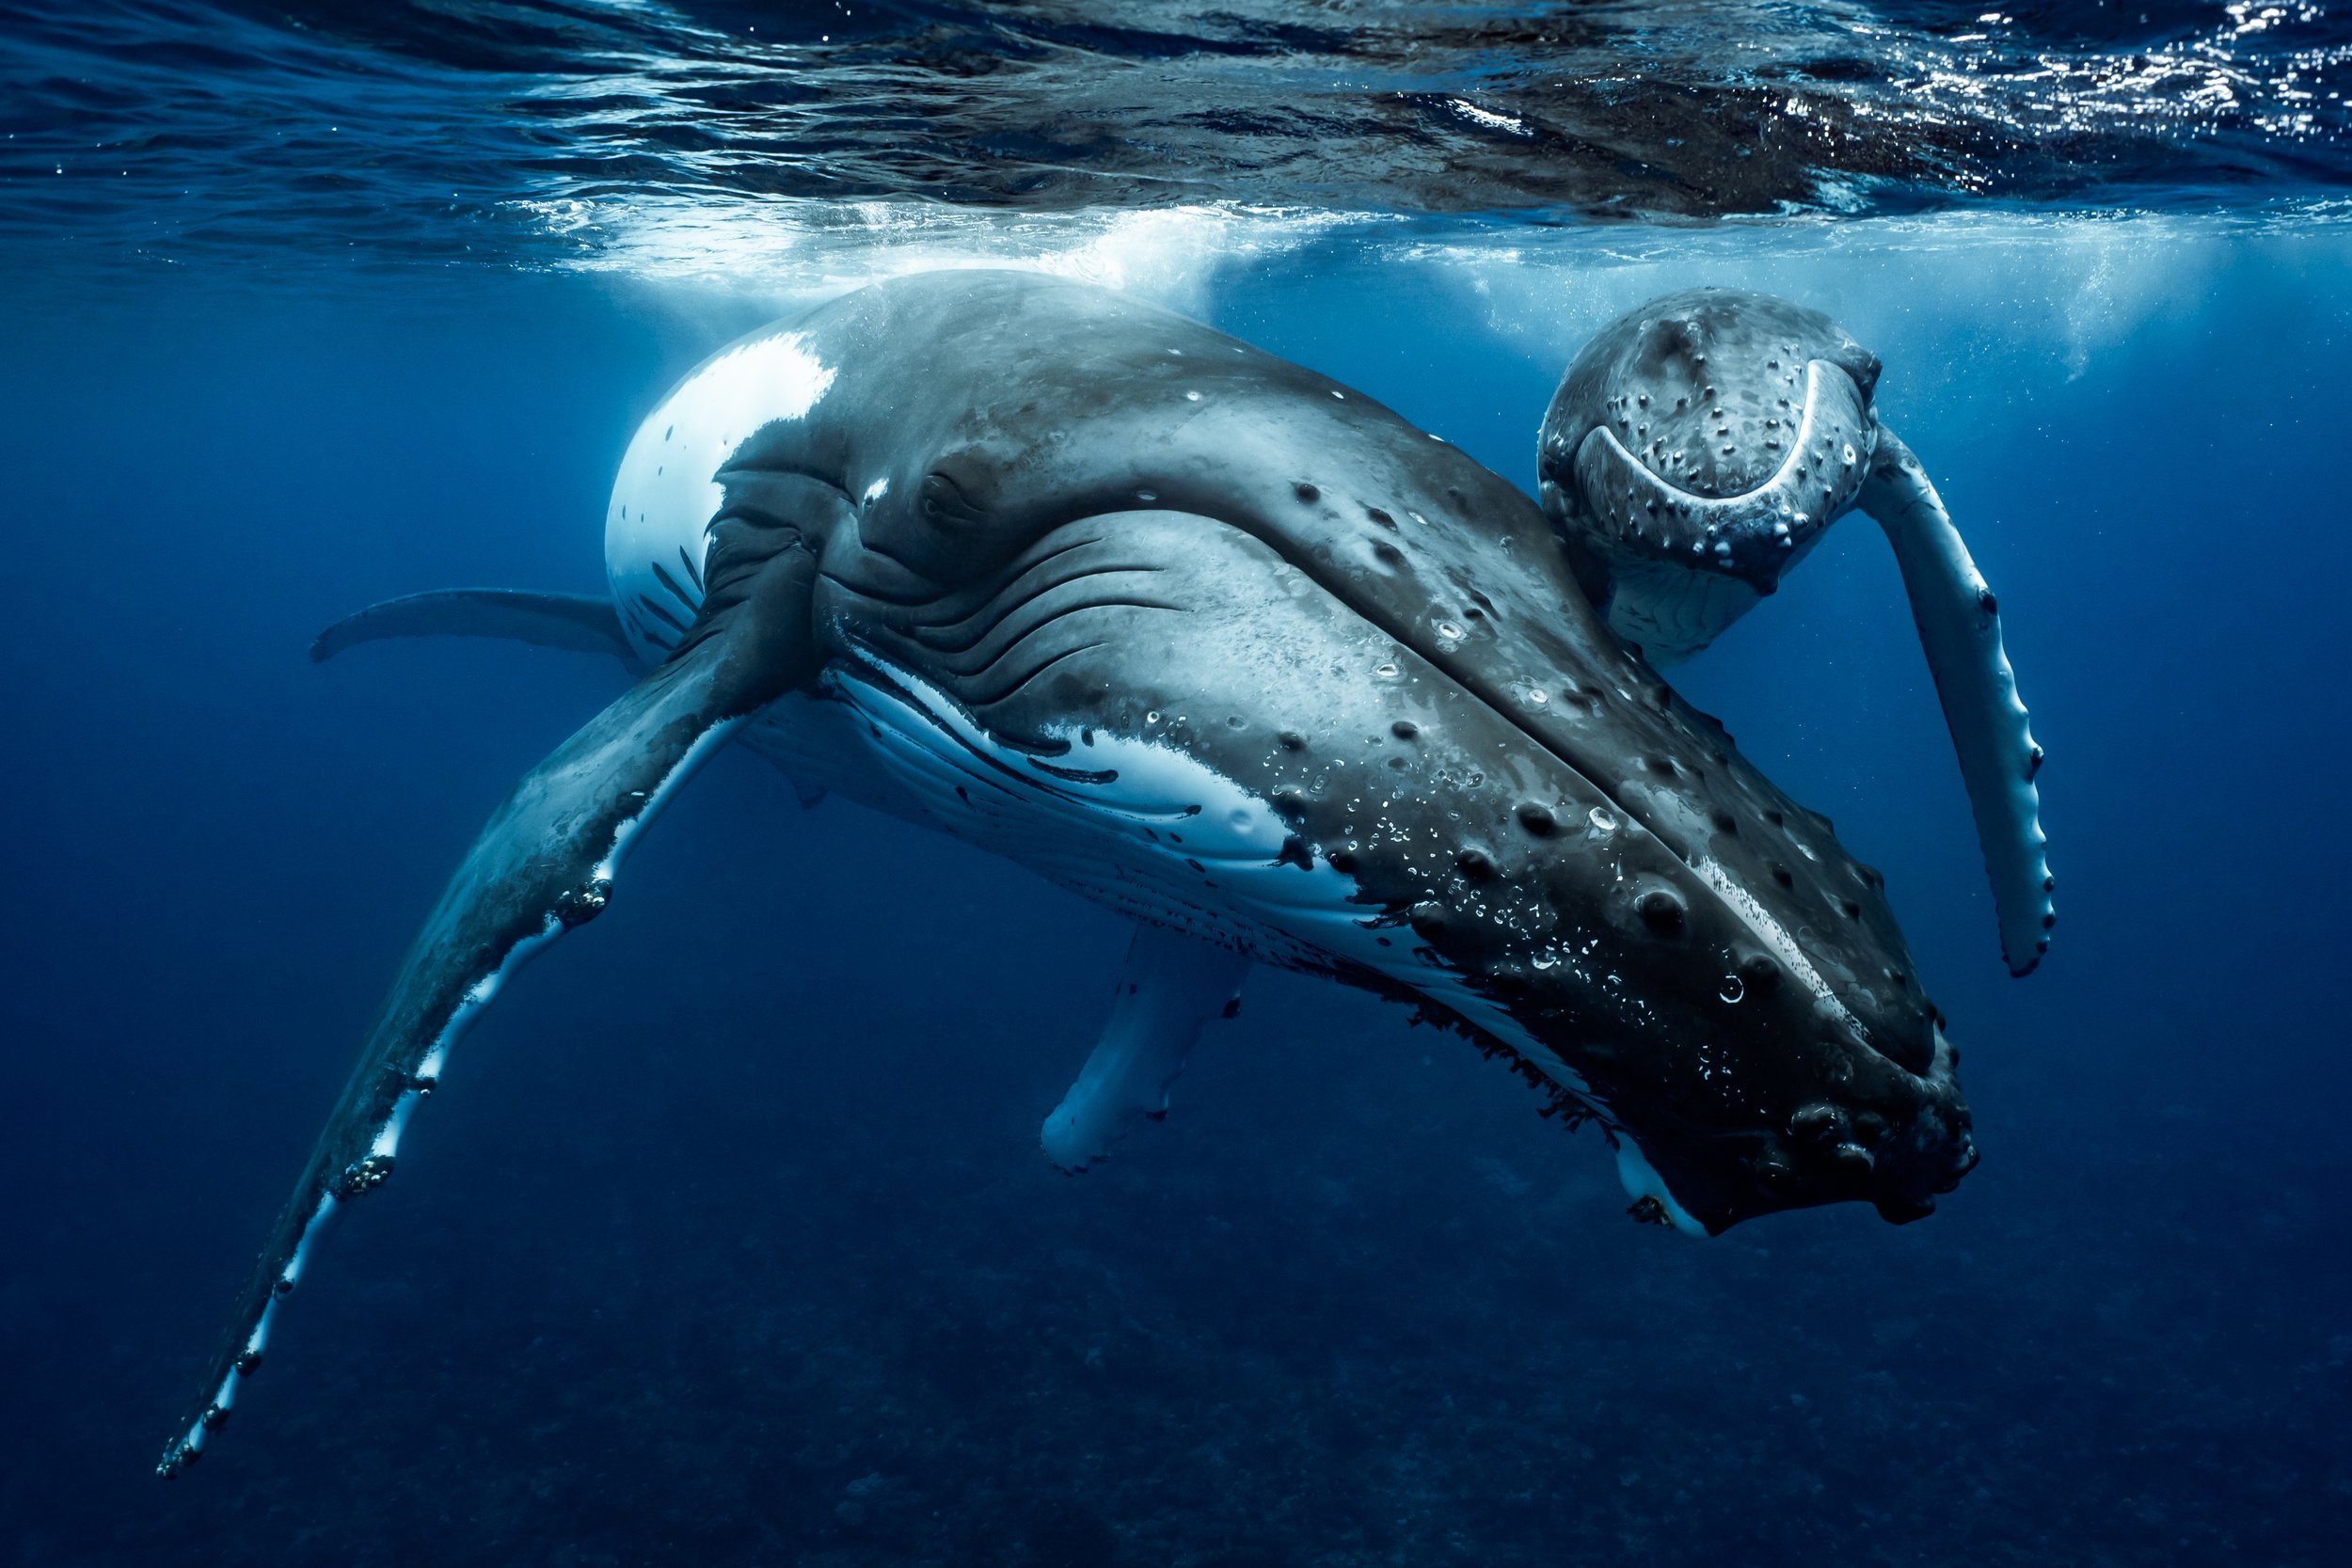 rurutu-inertia-network-matt-reichel-one-with-whales-swim-with-humpback-whales-french-polynesia-452.jpg